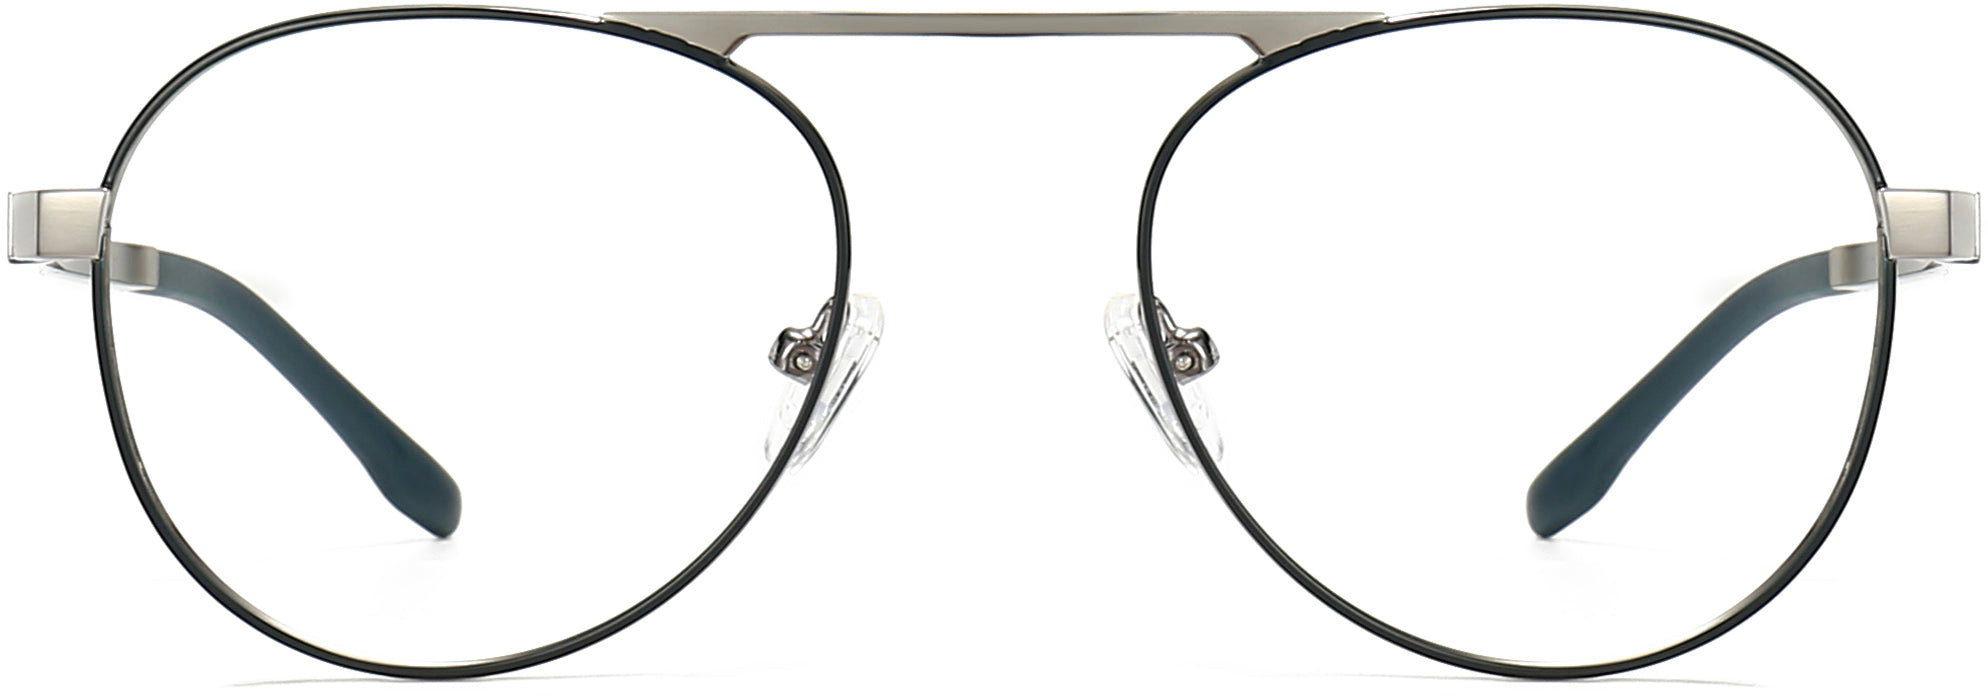 Kaysen Round Black Eyeglasses from ANRRI, front view